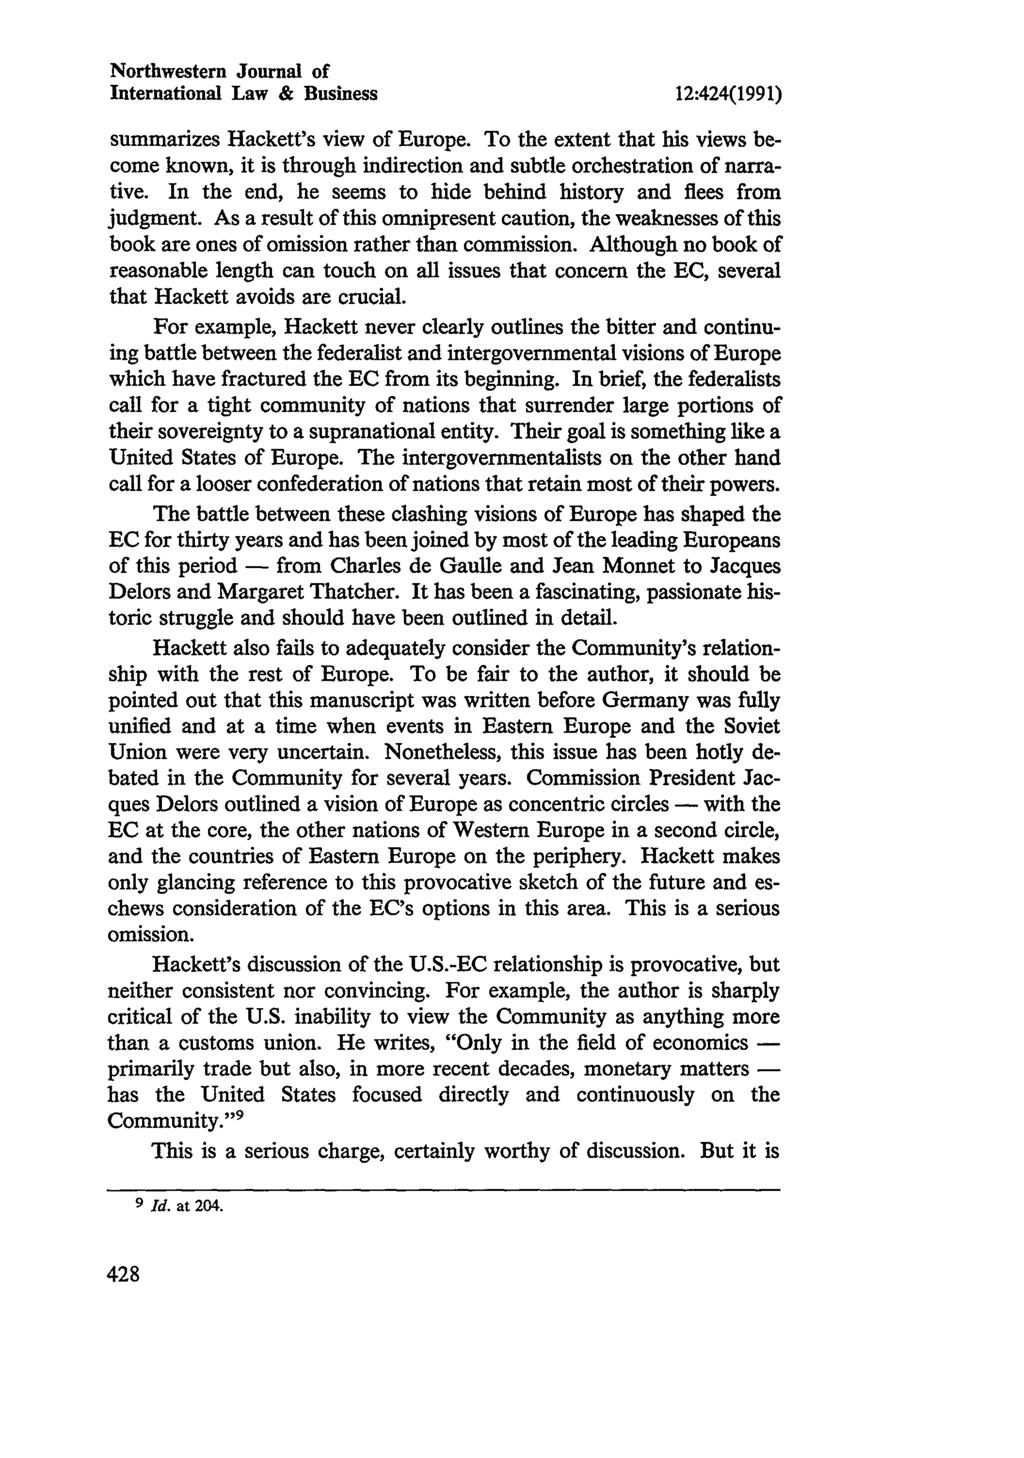 Northwestern Journal of International Law & Business 12:424(1991) summarizes Hackett's view of Europe.